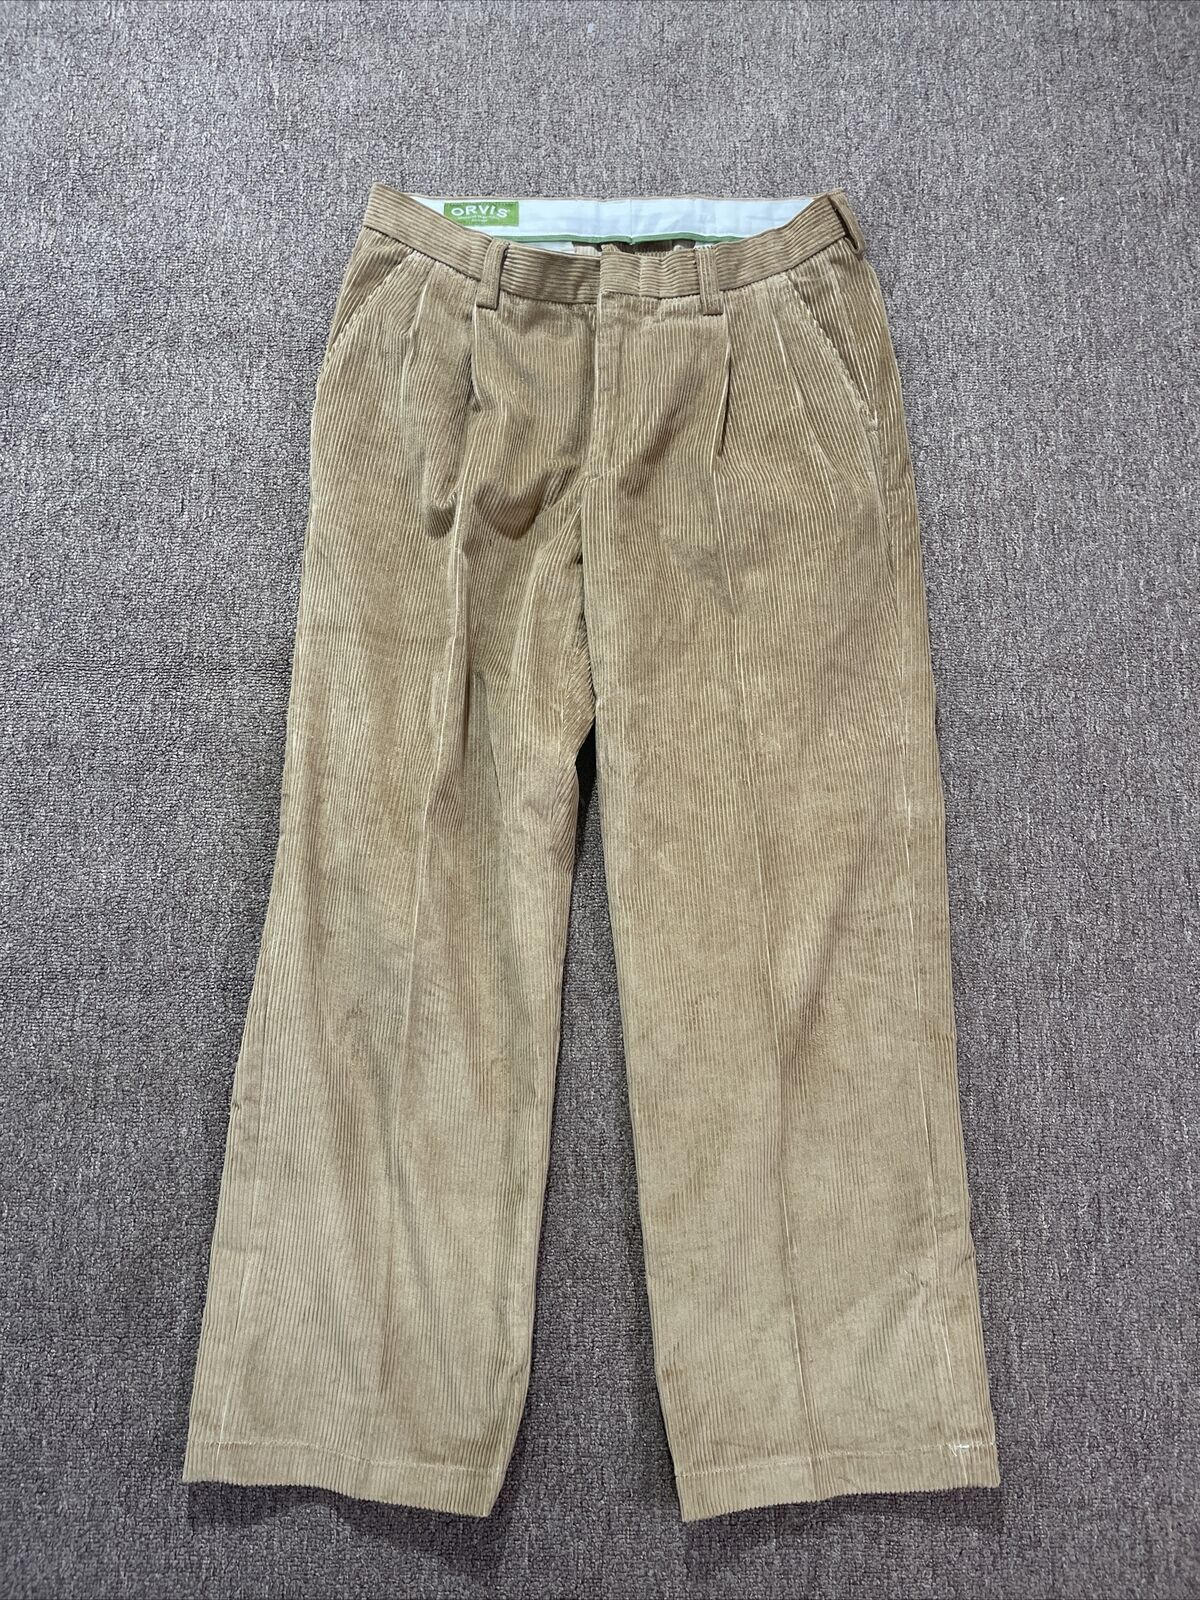 vintage orvis pants men - Gem